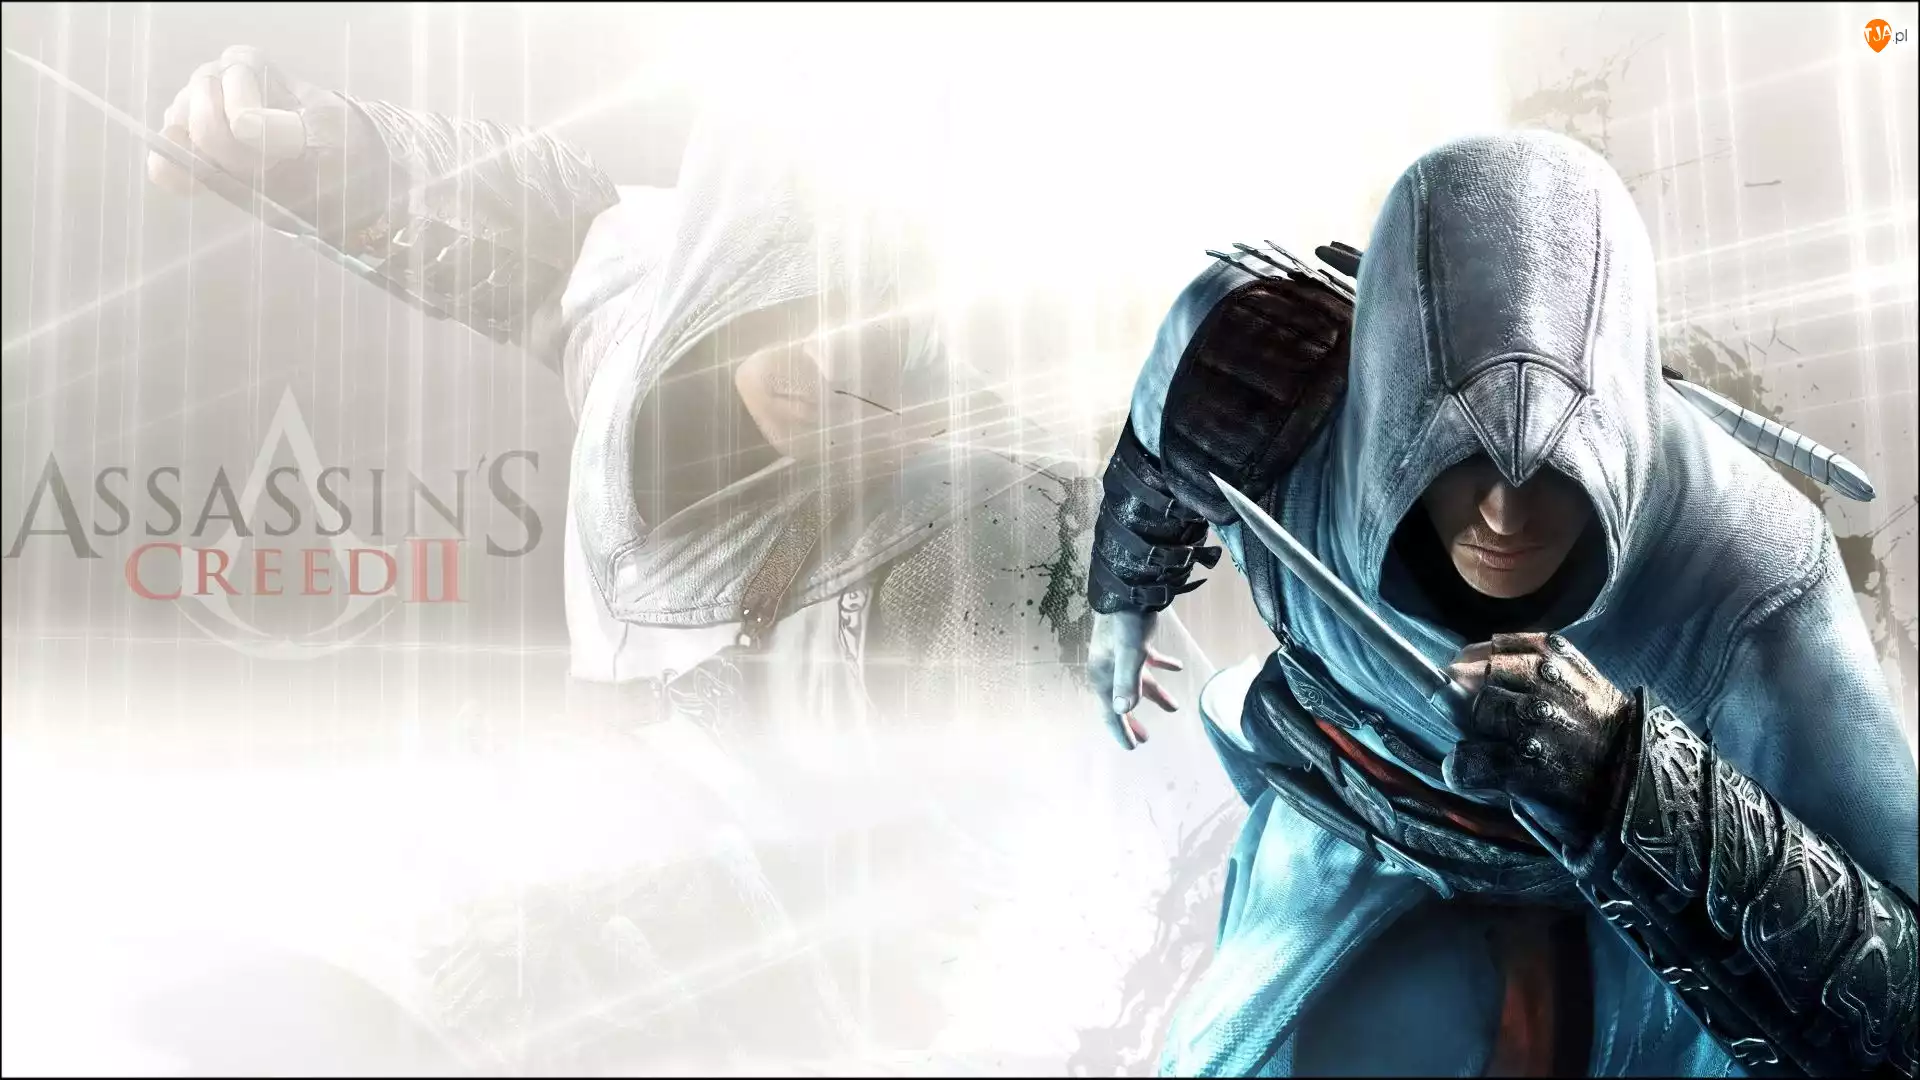 Assassins Creed, Altair